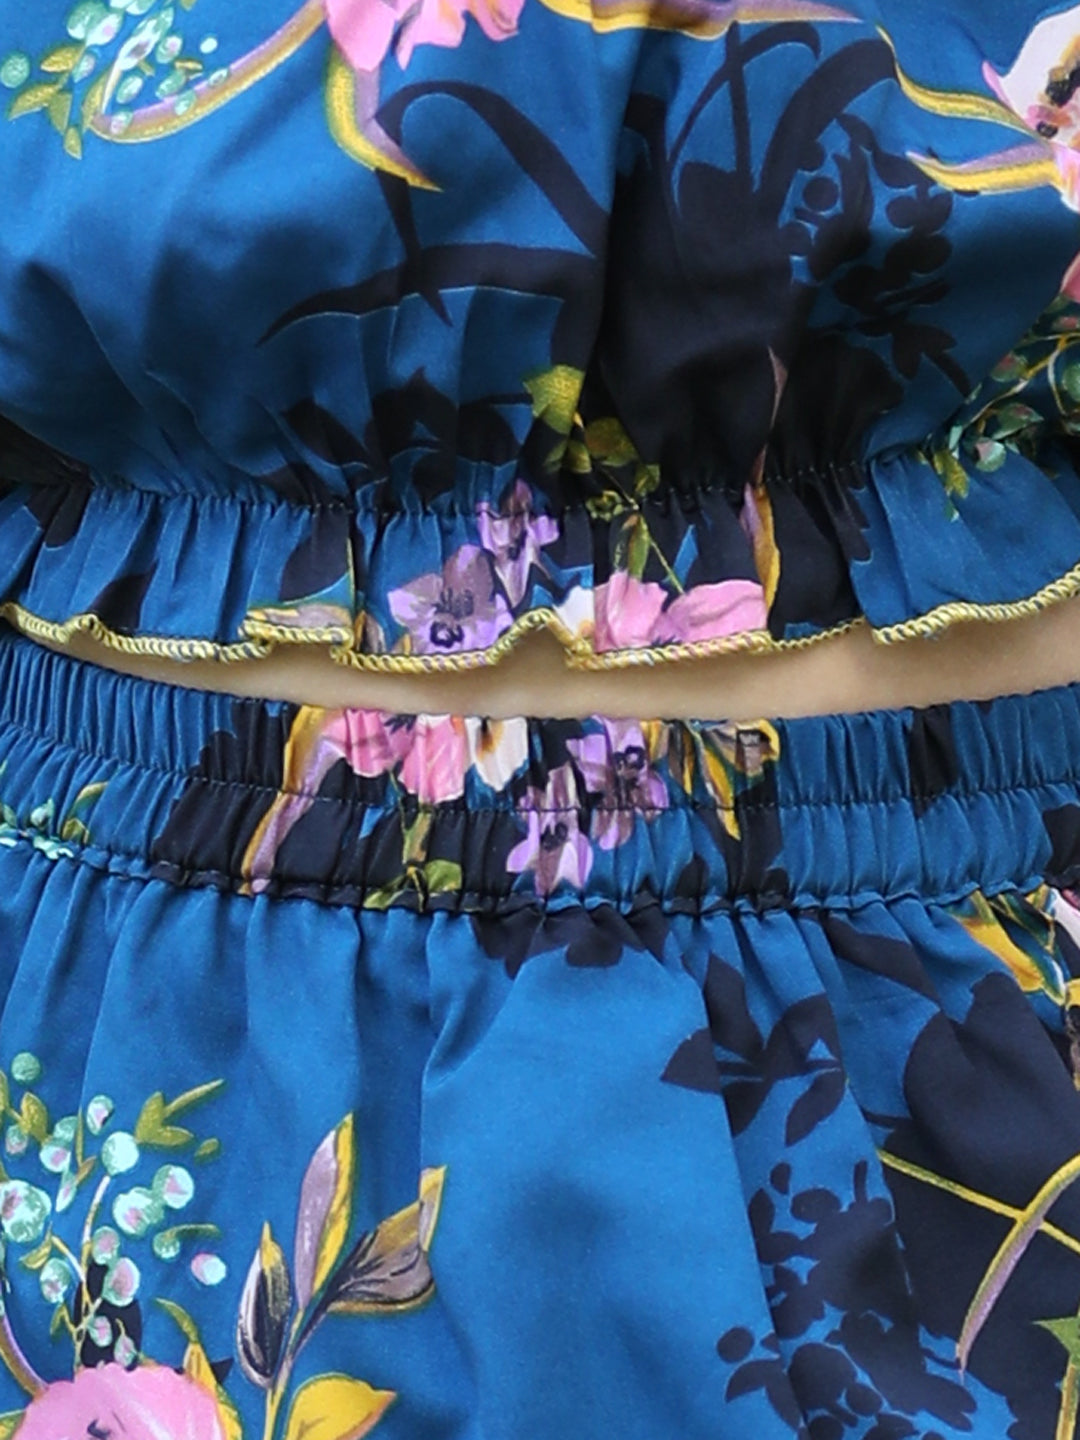 Cutiekins Shoulder Straps Printed Crop Top & Skirt Set -Teal Blue & Yellow